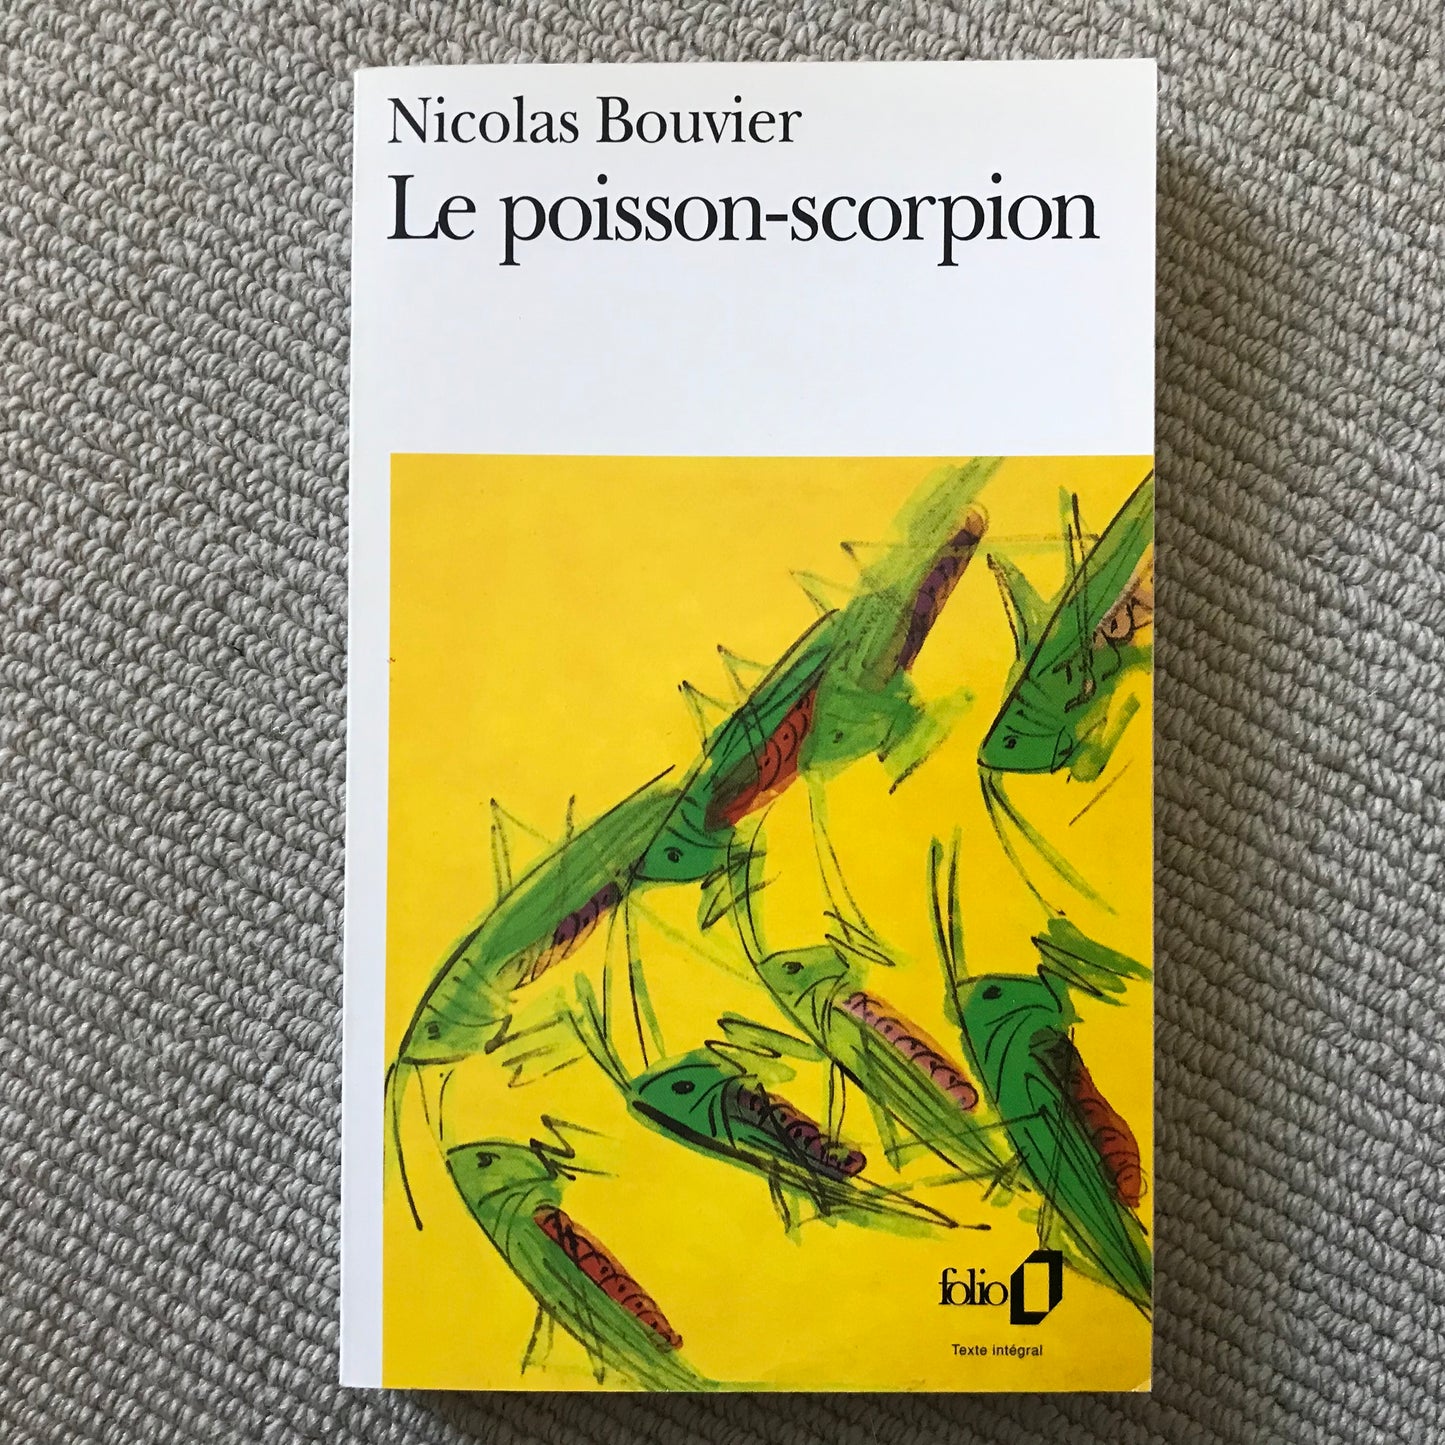 Bouvier, Nicolas - Le poisson-scorpion